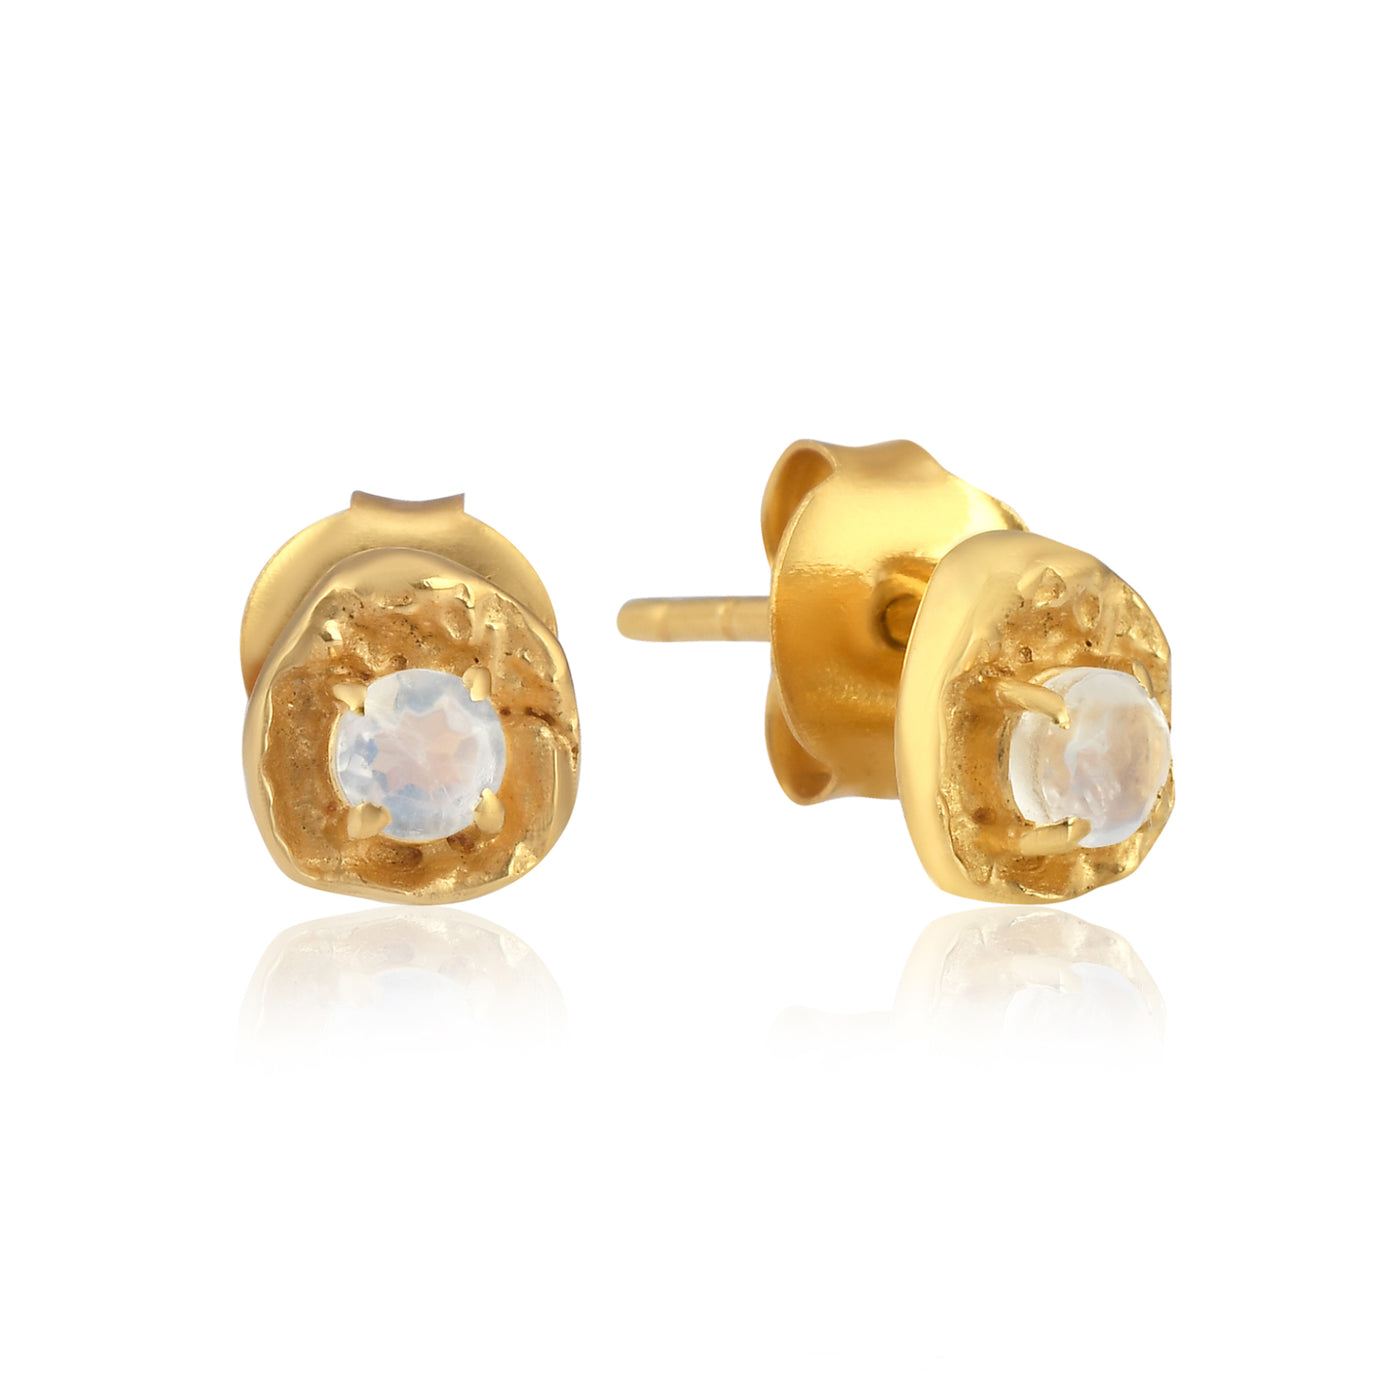 June moonstone birthstone organic gold stud earrings, Rani & Co. jewellery